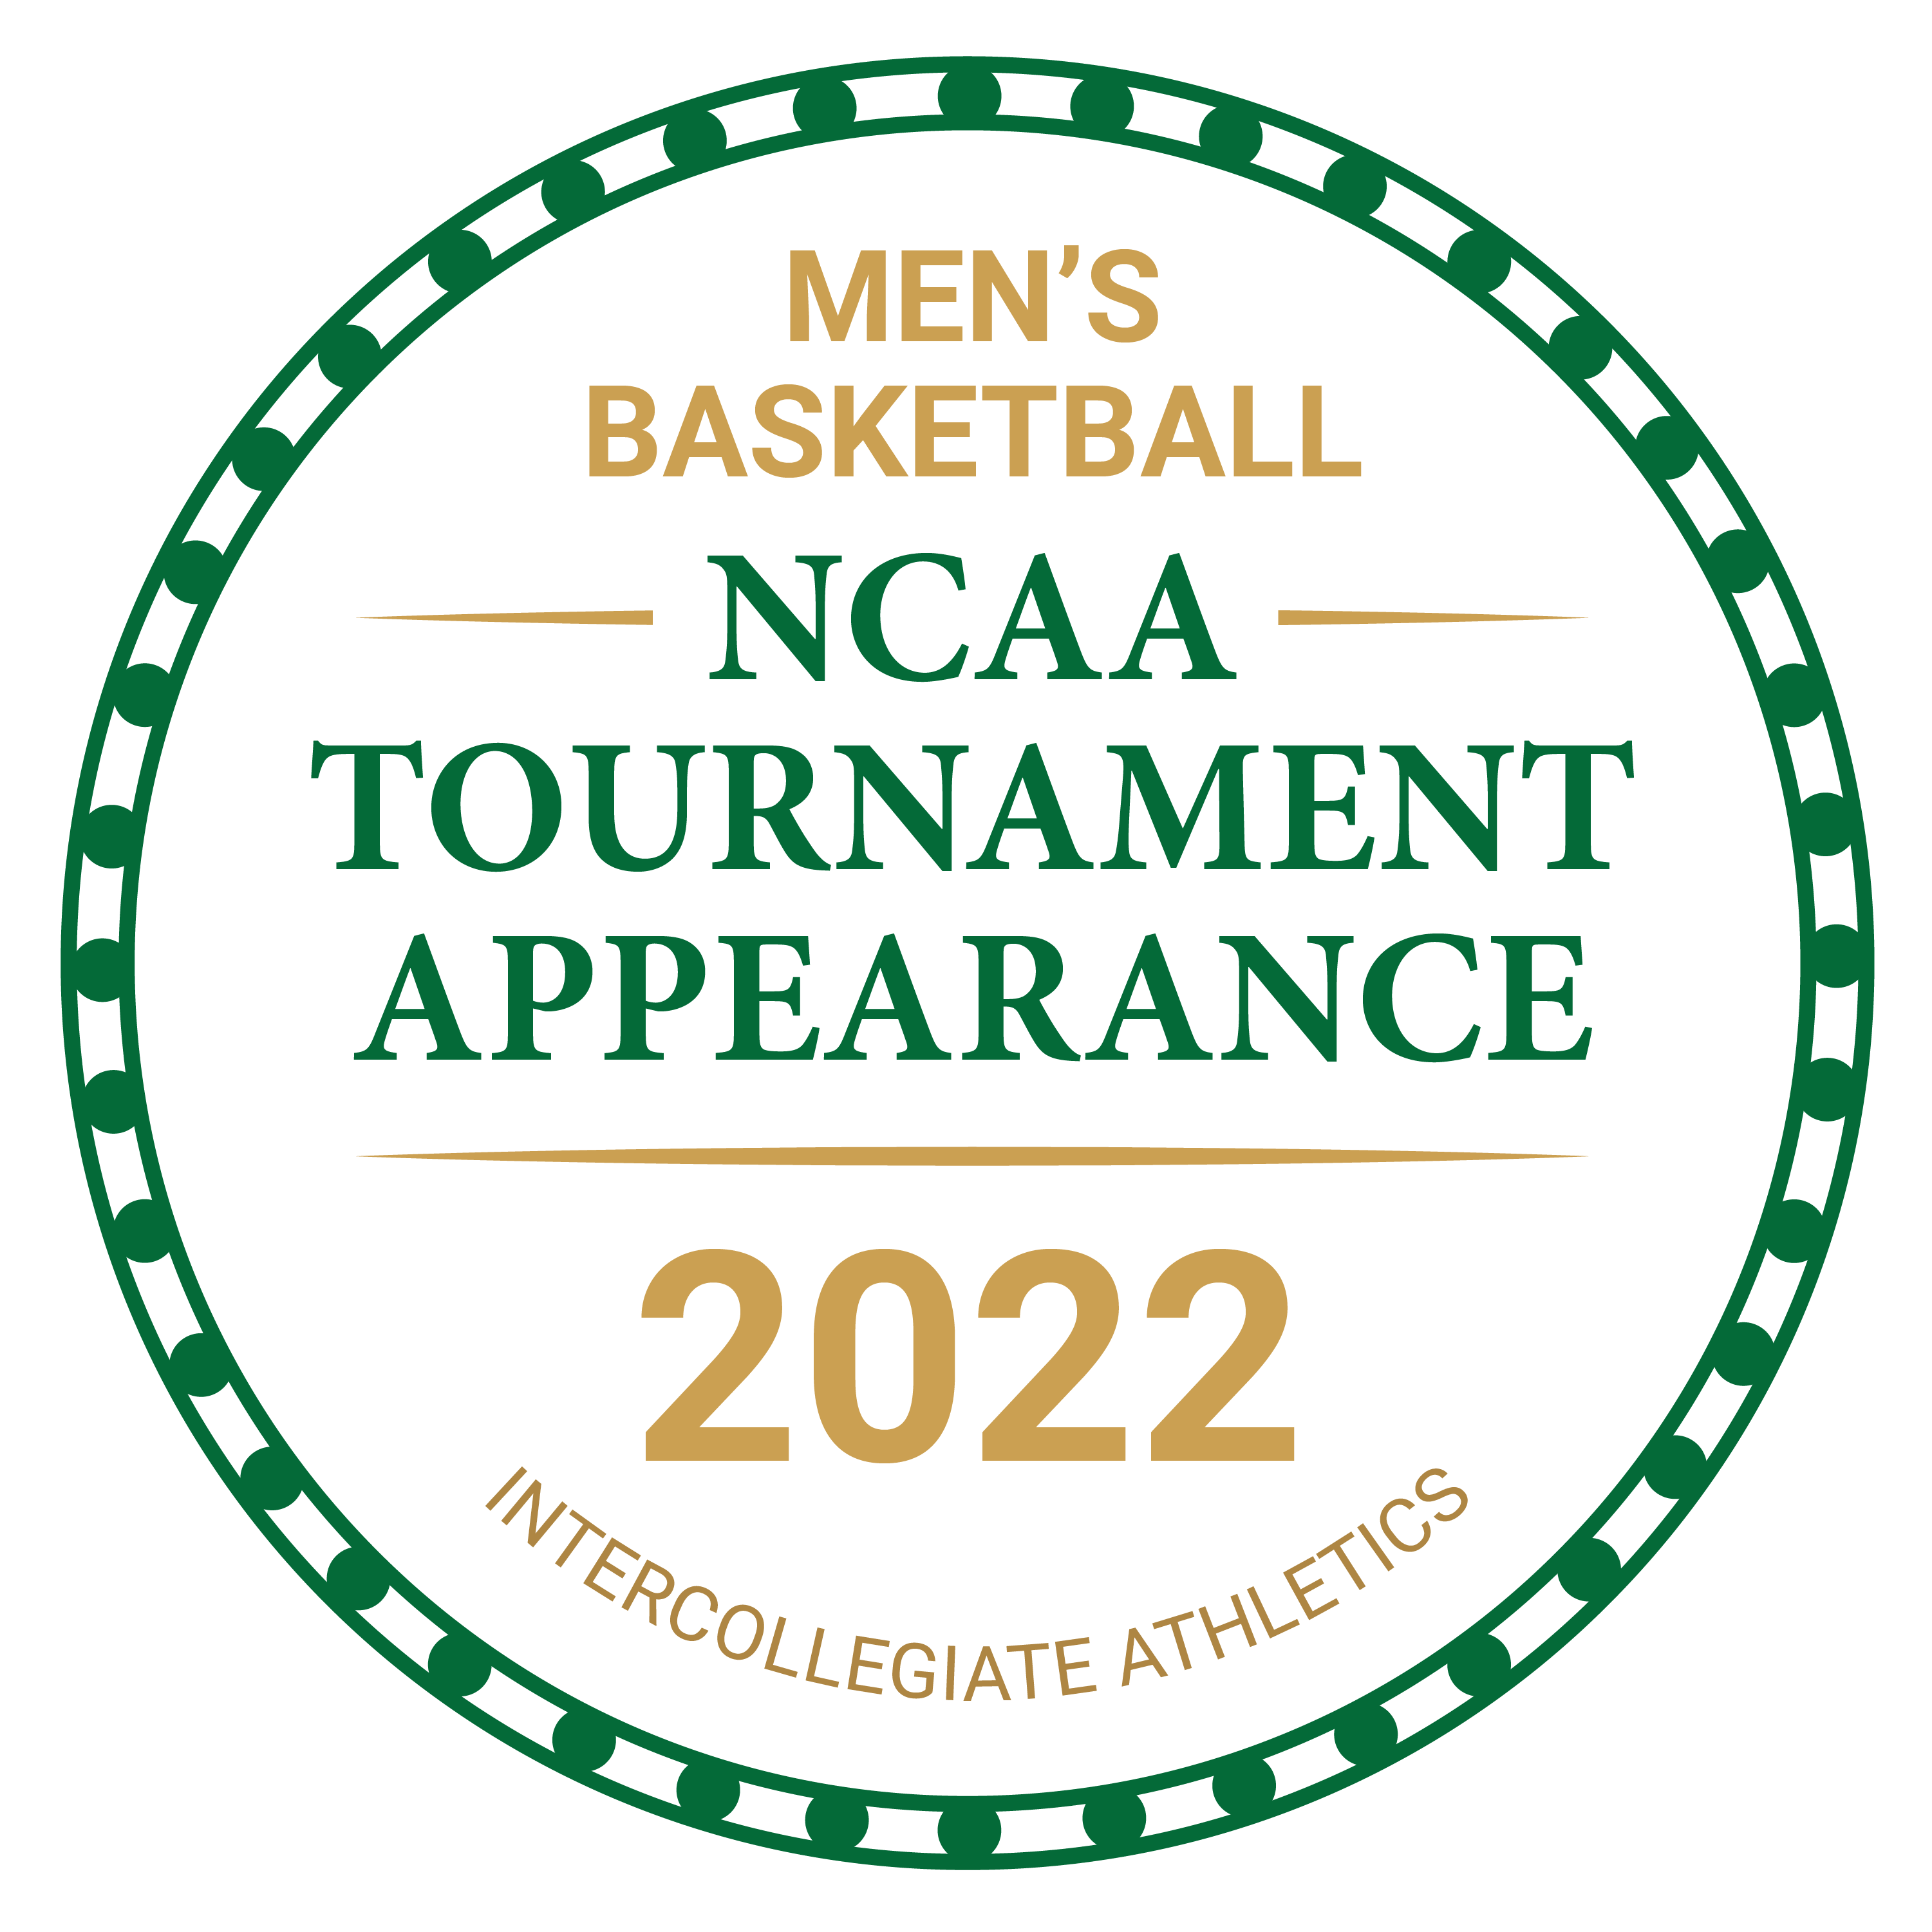 2022 Intercollegiate Athletics NCAA Tournament Appearance Basketball